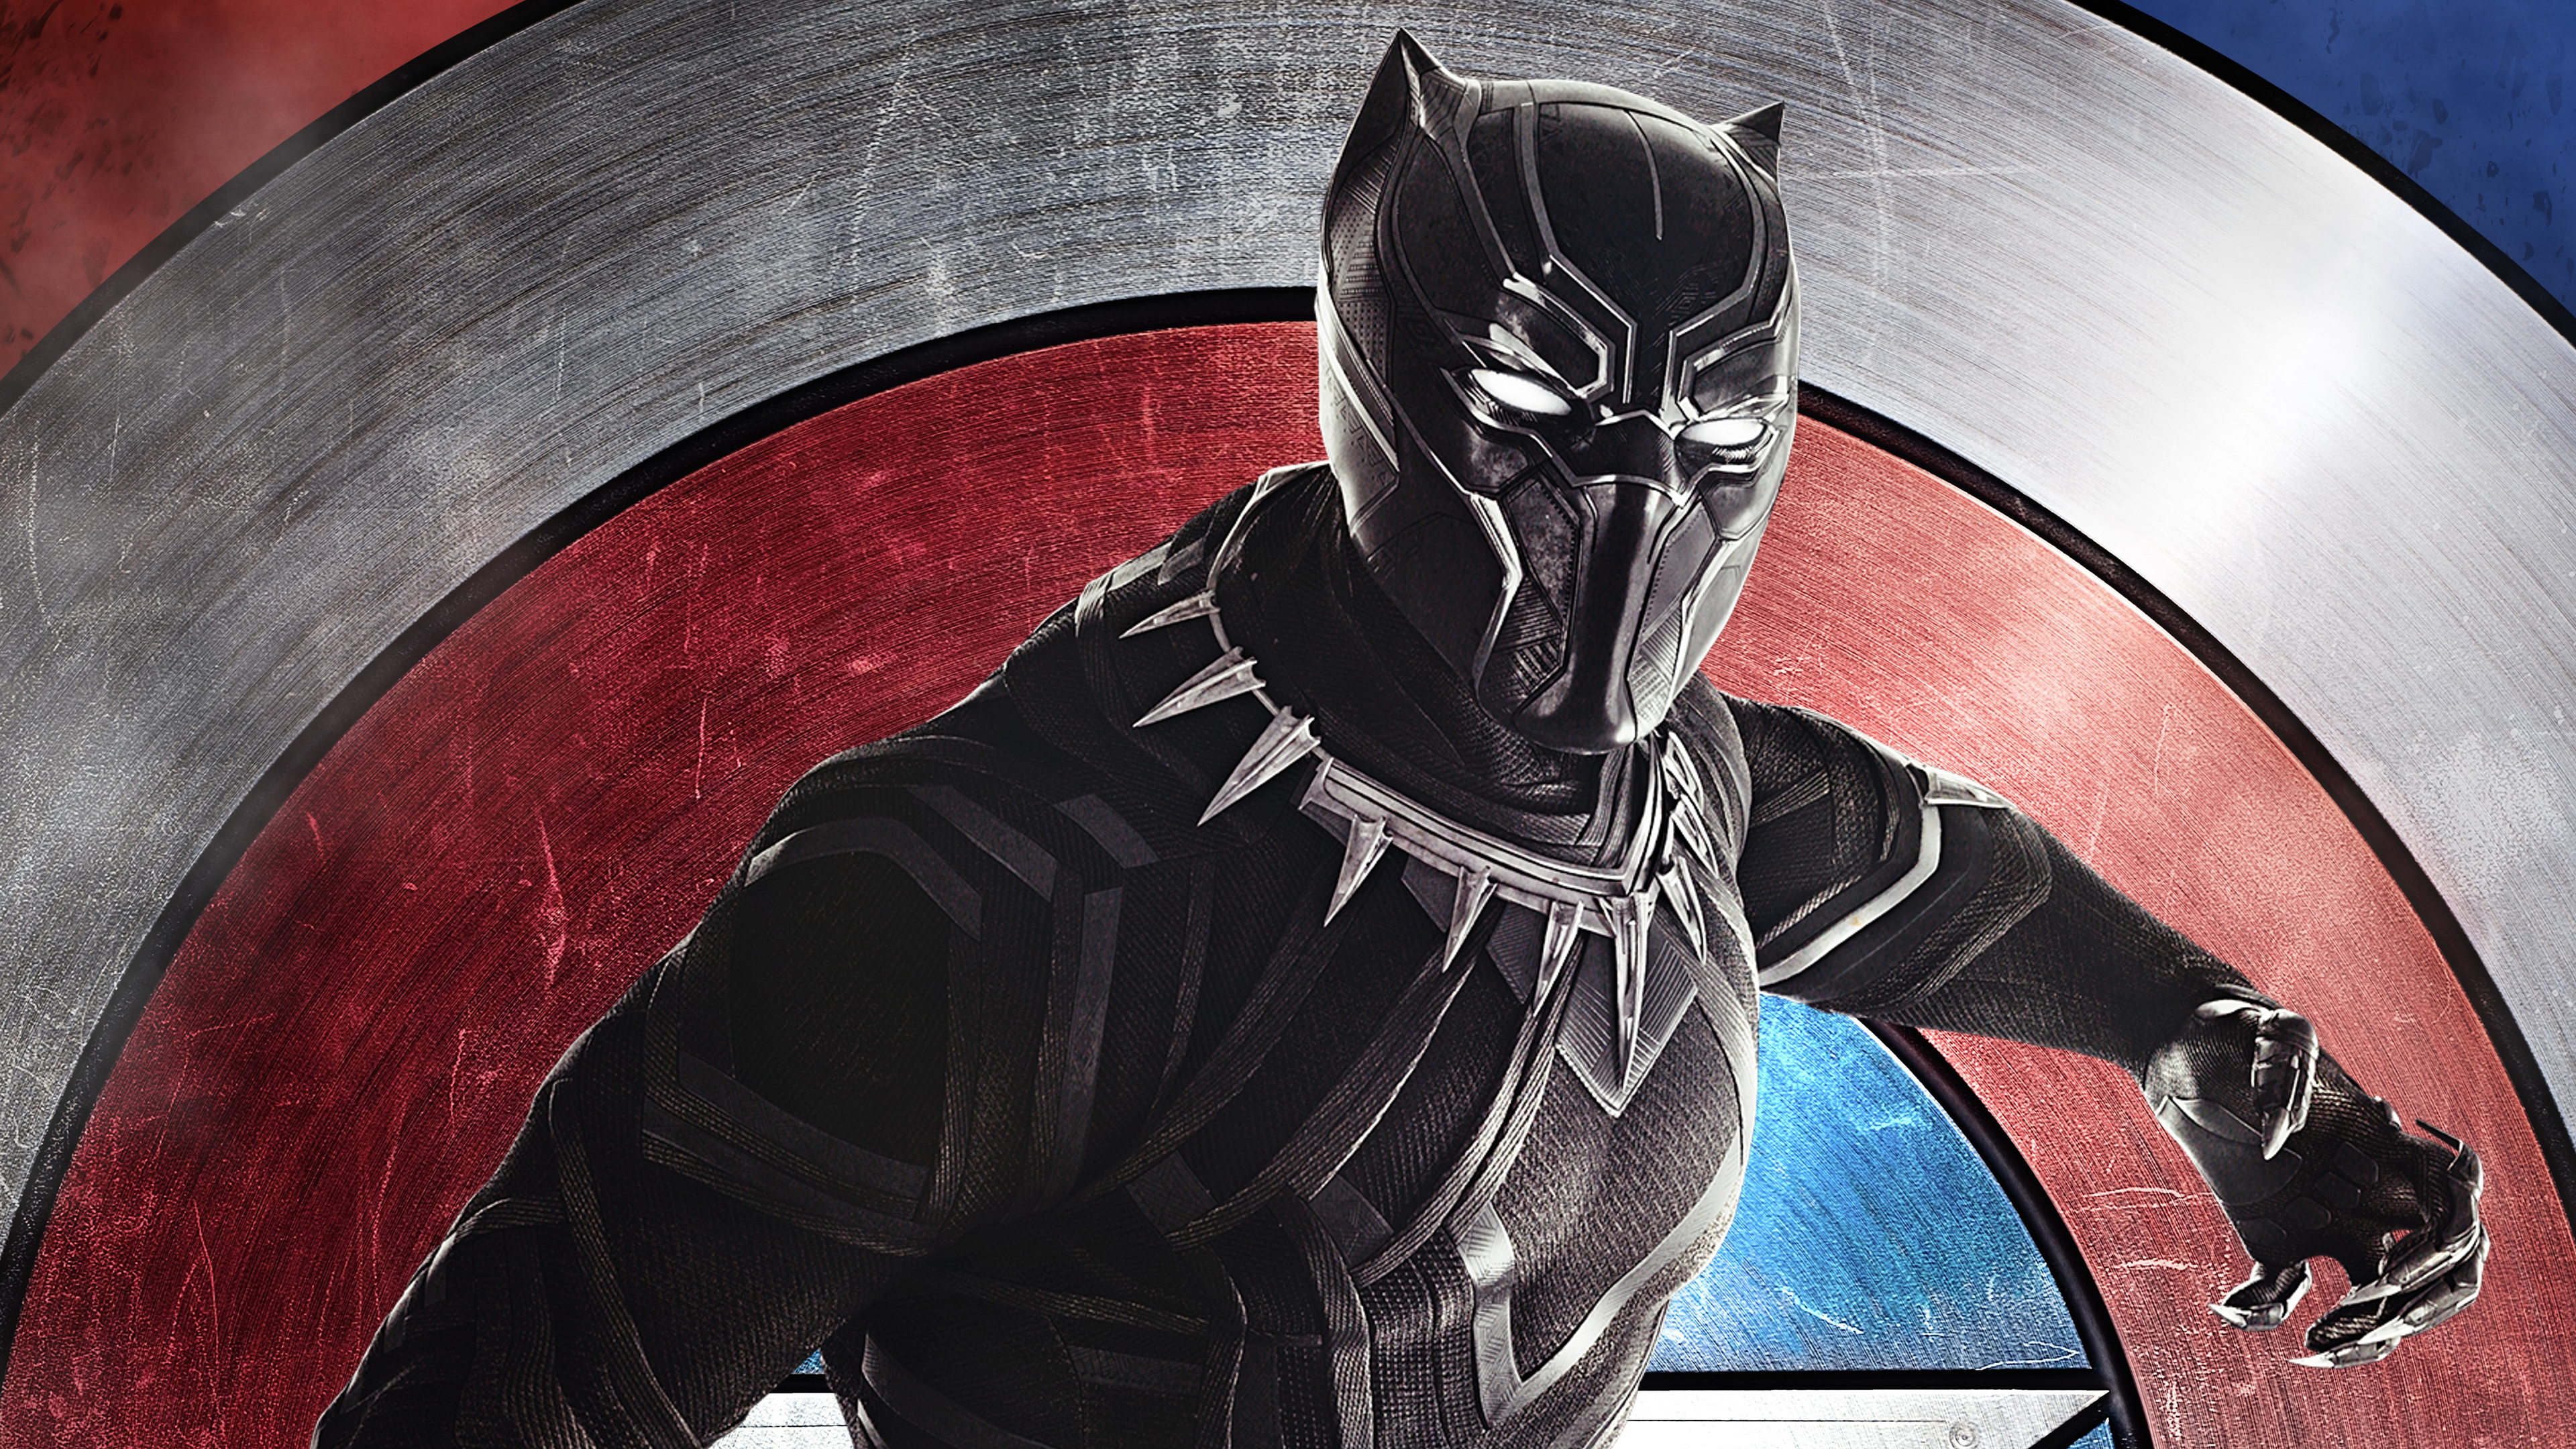  Black  Panther  4k  Civil War superheroes wallpapers  hd 